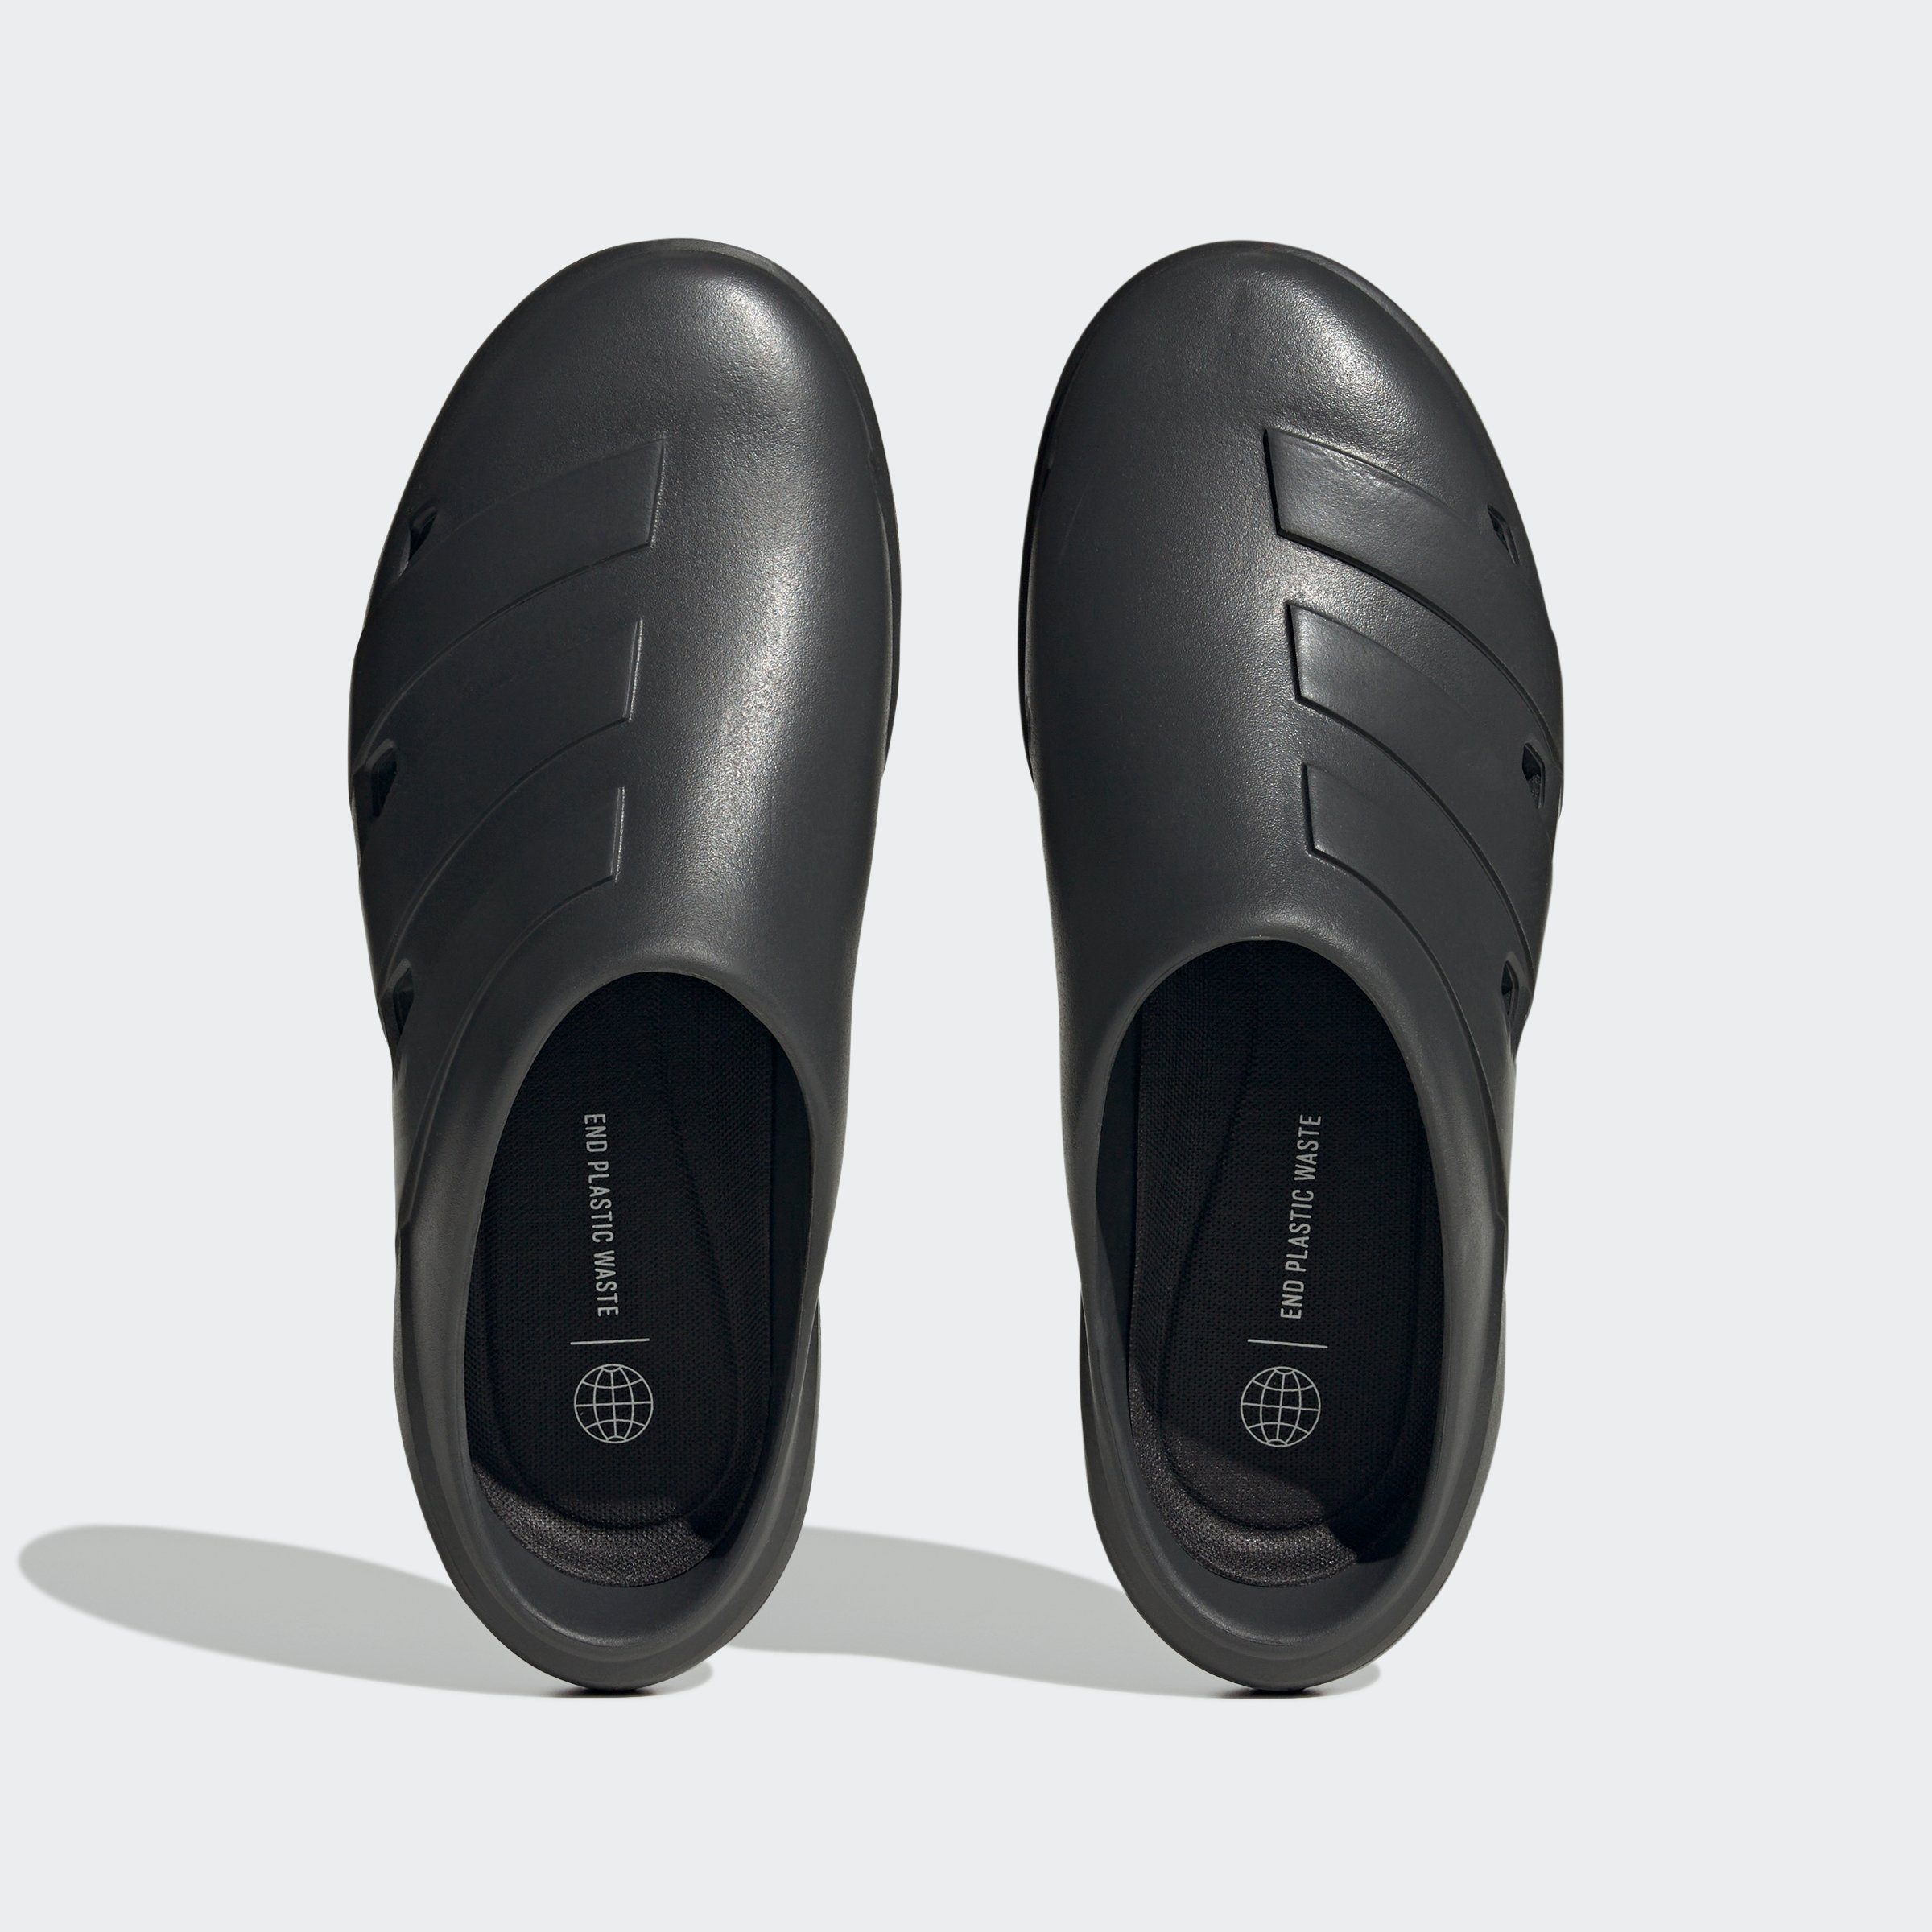 CLOG Core Carbon / Carbon Sportswear adidas / ADICANE Clog Black